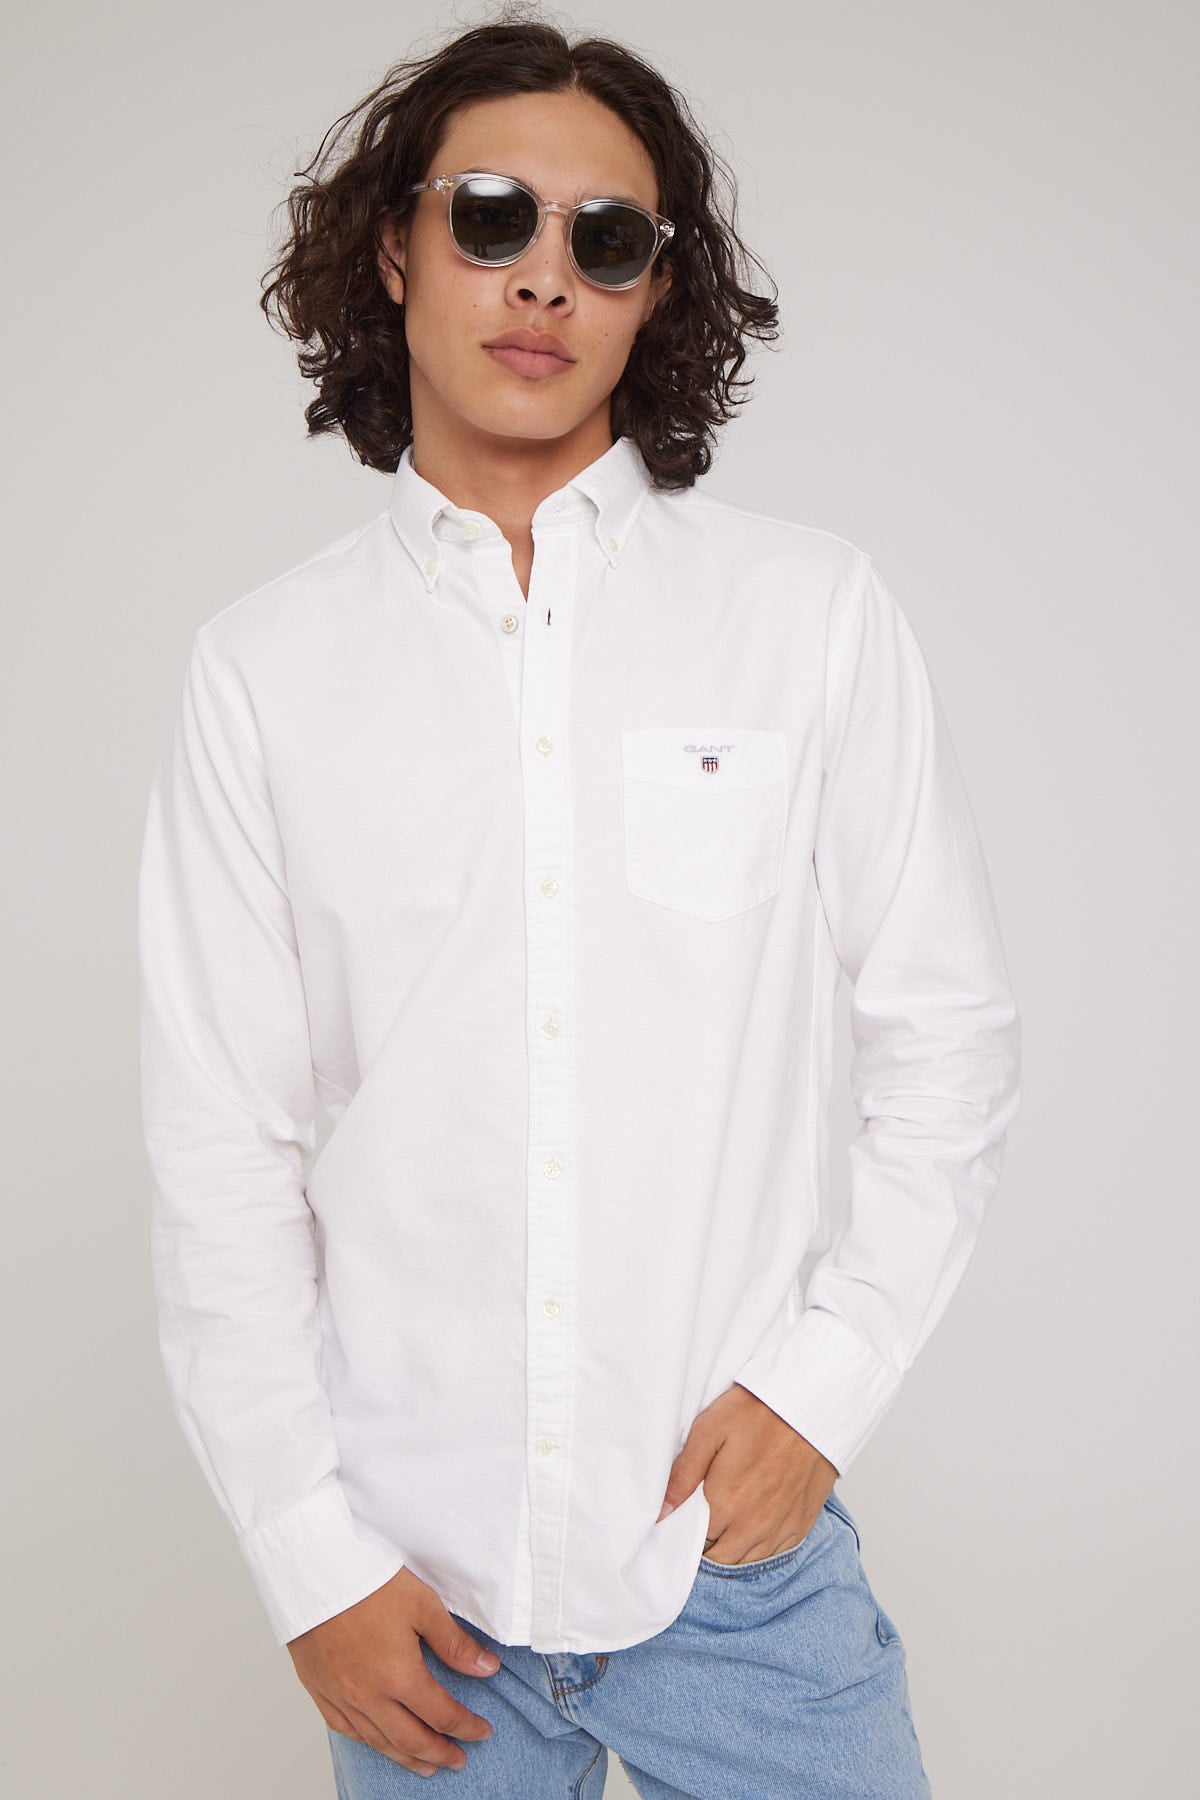 Gant The Oxford Button Down Collar Long Sleeve Shirt White